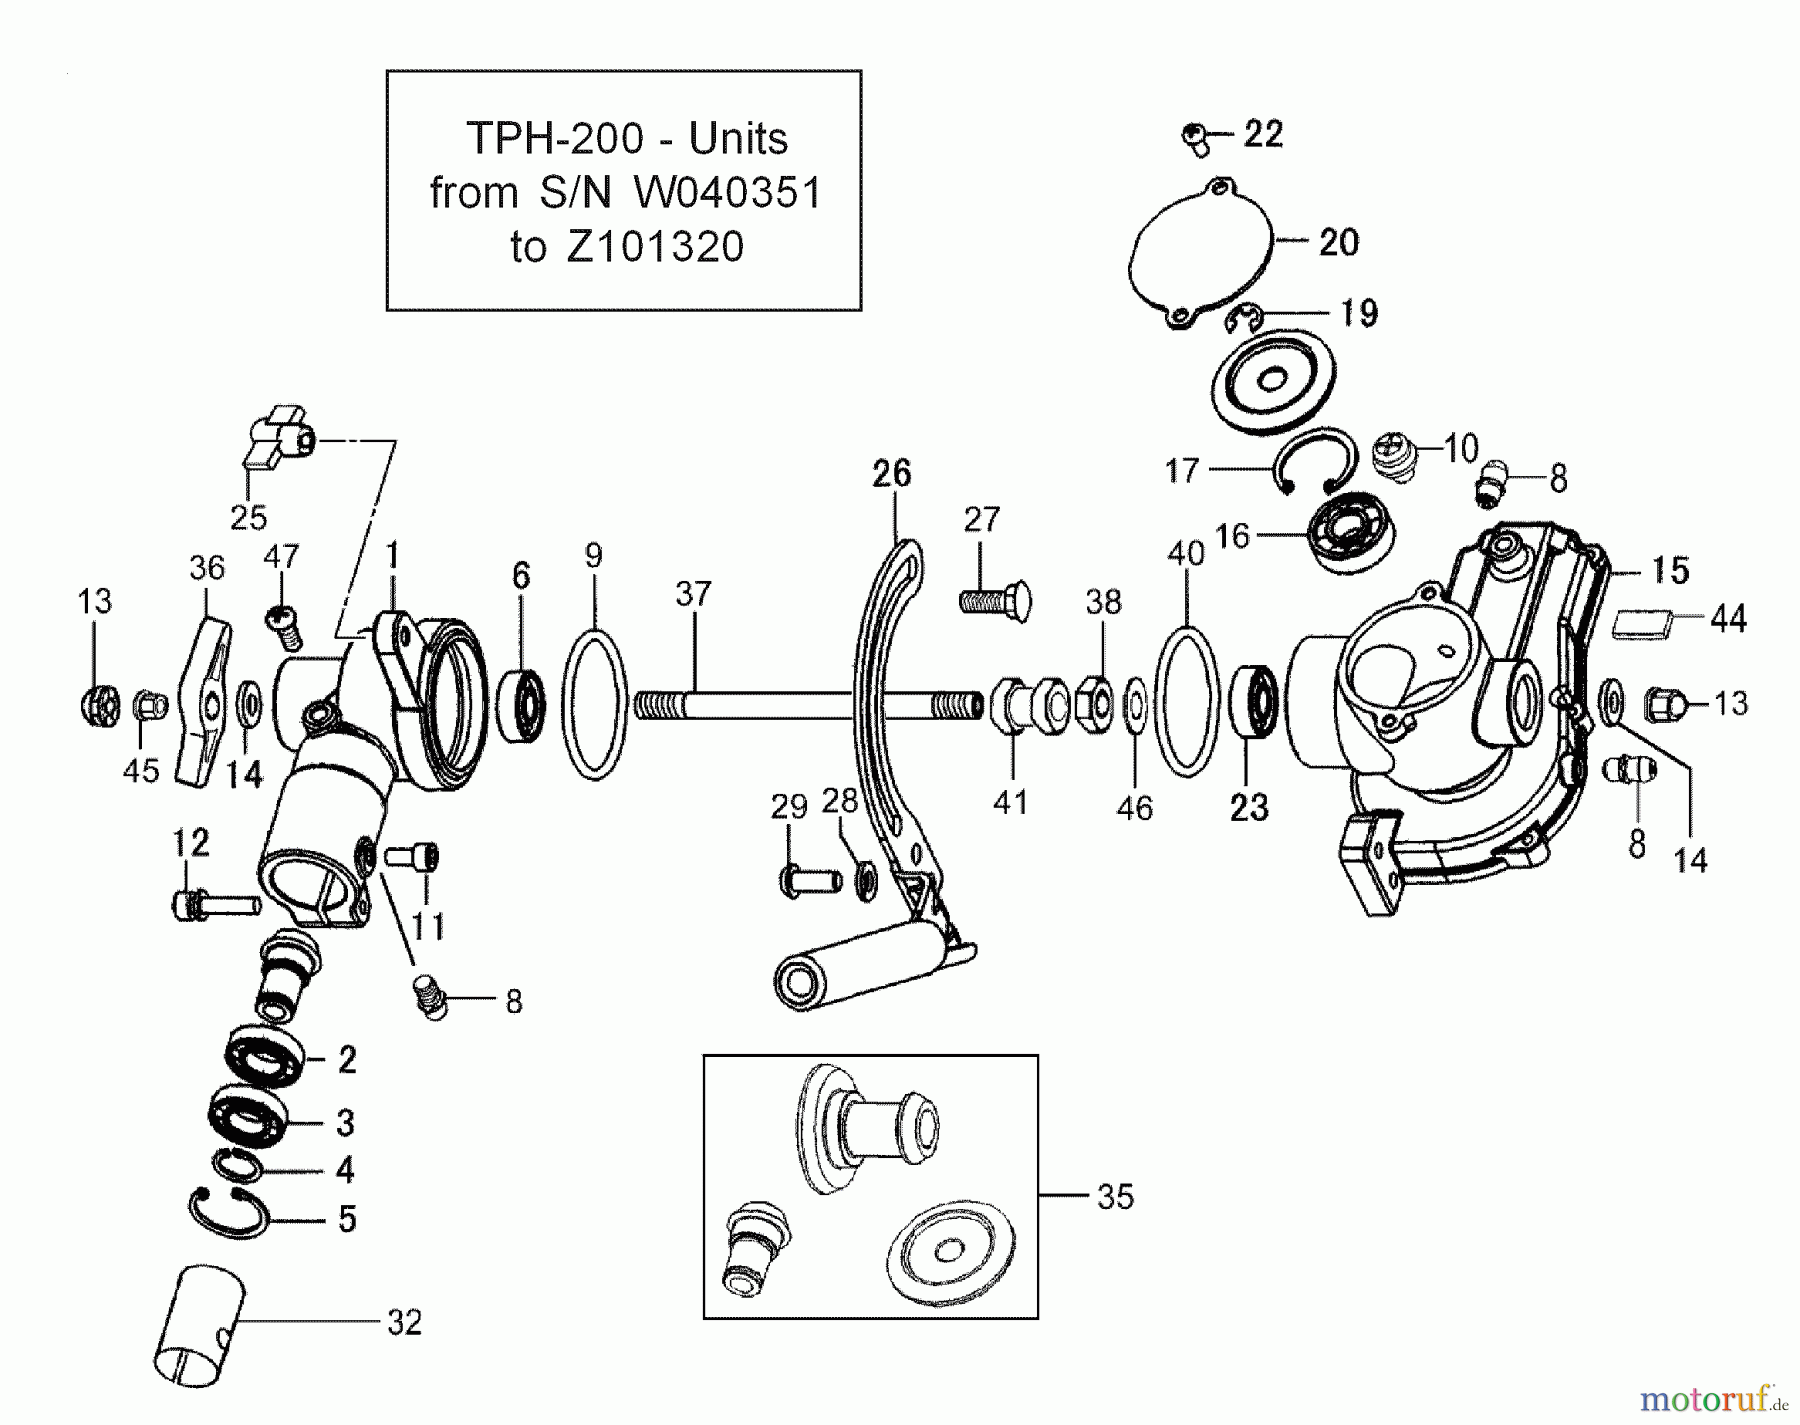  Tanaka Zubehör TPH-210 - Tanaka Articulating Hedgetrimmer Attachment Gear Case, Adjusting Handle, Gears (S/N W040351 to Z101320)